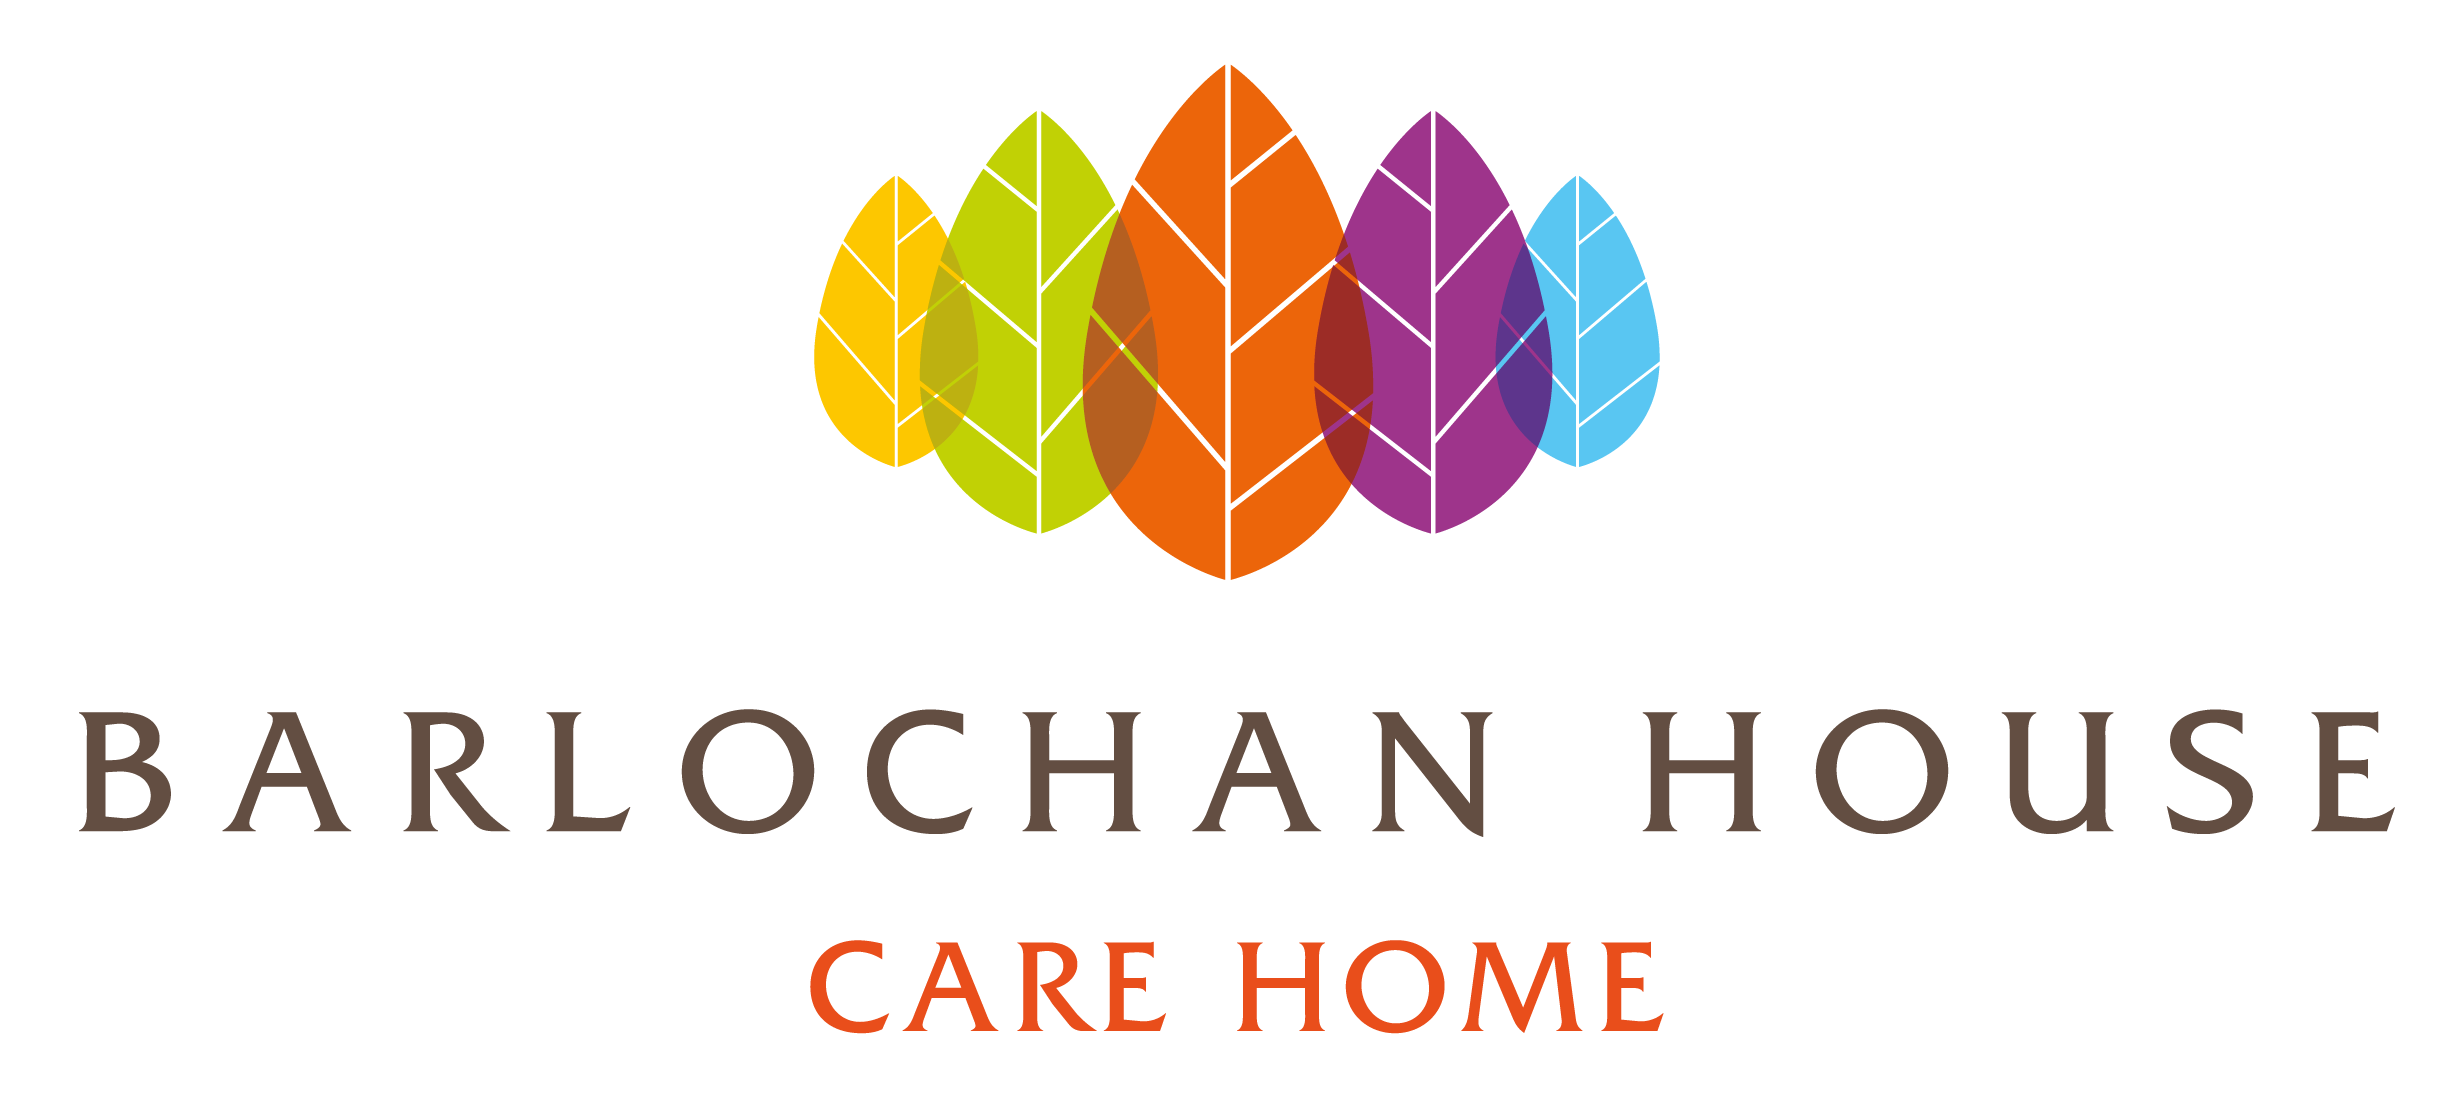 Barlochan House Care Home - Care Home